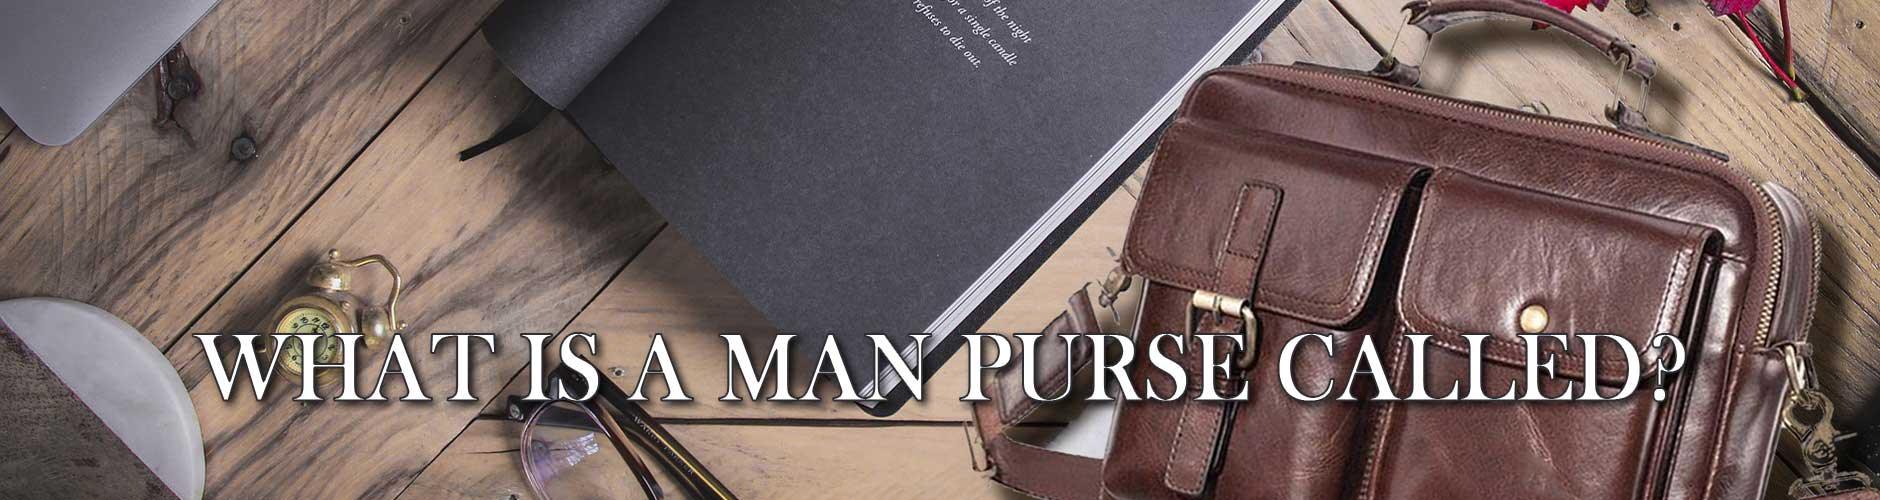 Amazon.com: NIUCUNZH Genuine Leather Mens Clutch Bag Man Purse Handbag 12  inches Large Hand Bag Big Clutch Wallet Black : Clothing, Shoes & Jewelry